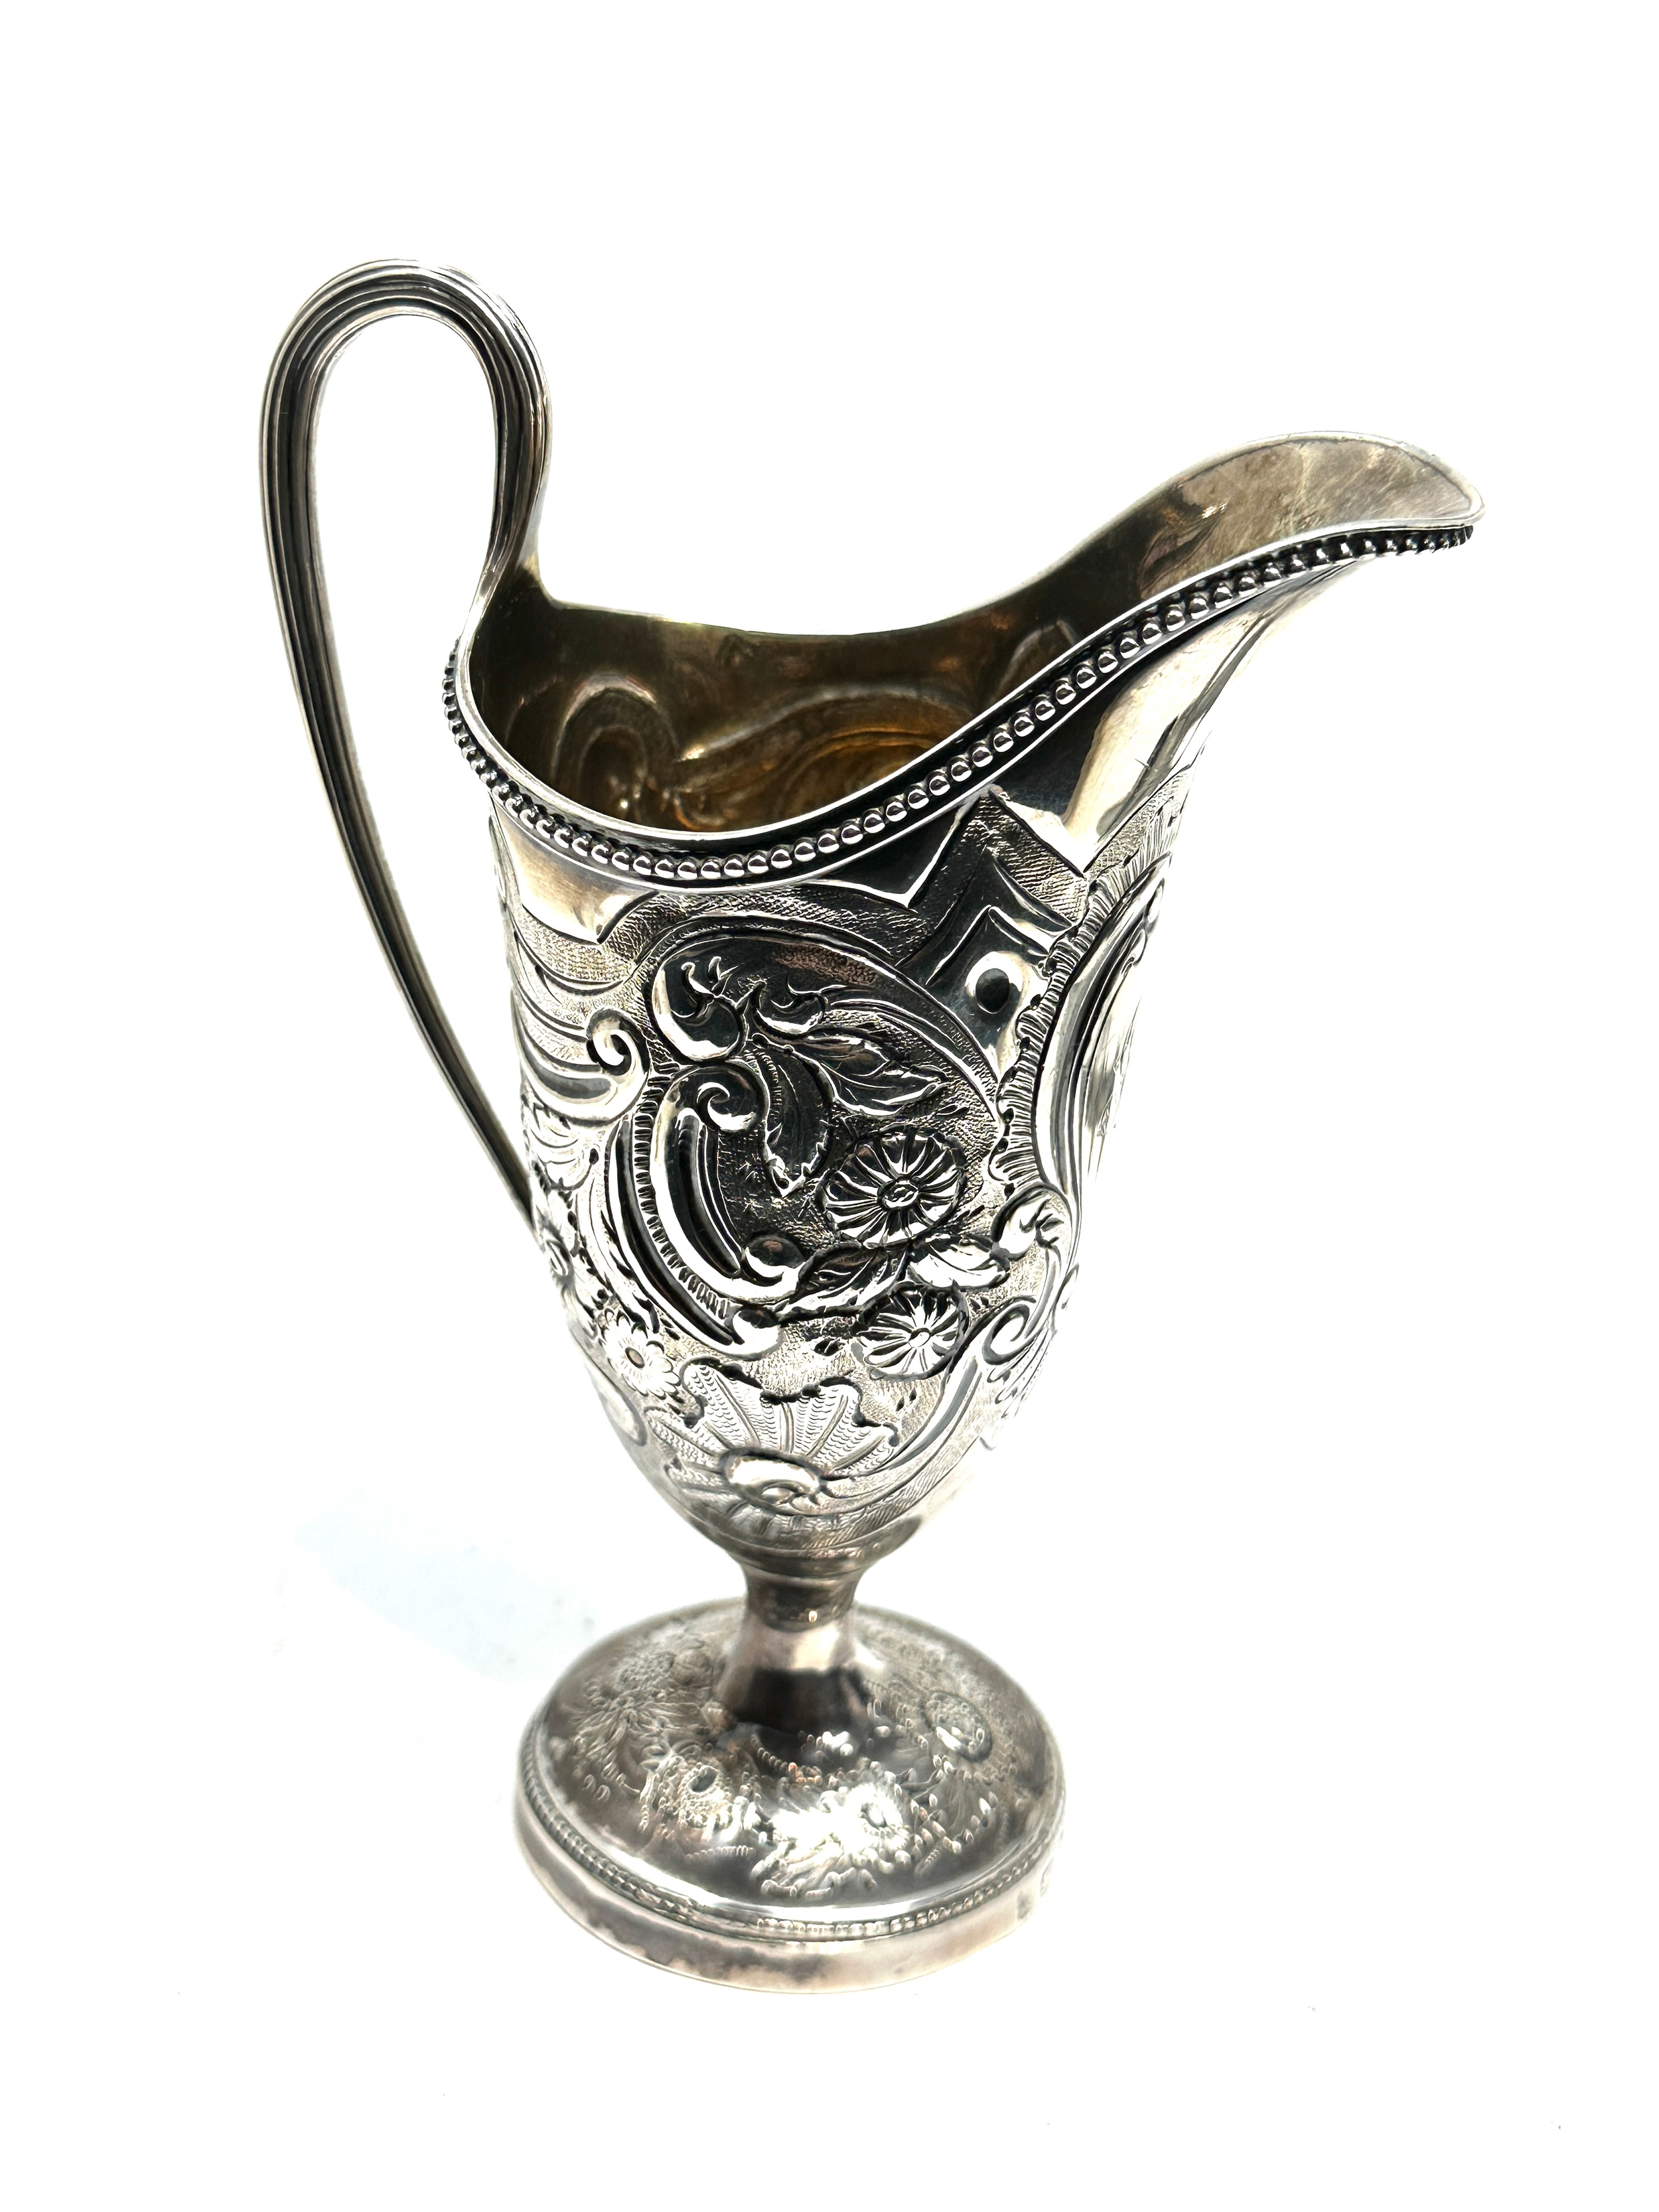 fine heavy georgian silver cream jug london silver hallmarks weight approx 200g - Image 3 of 6